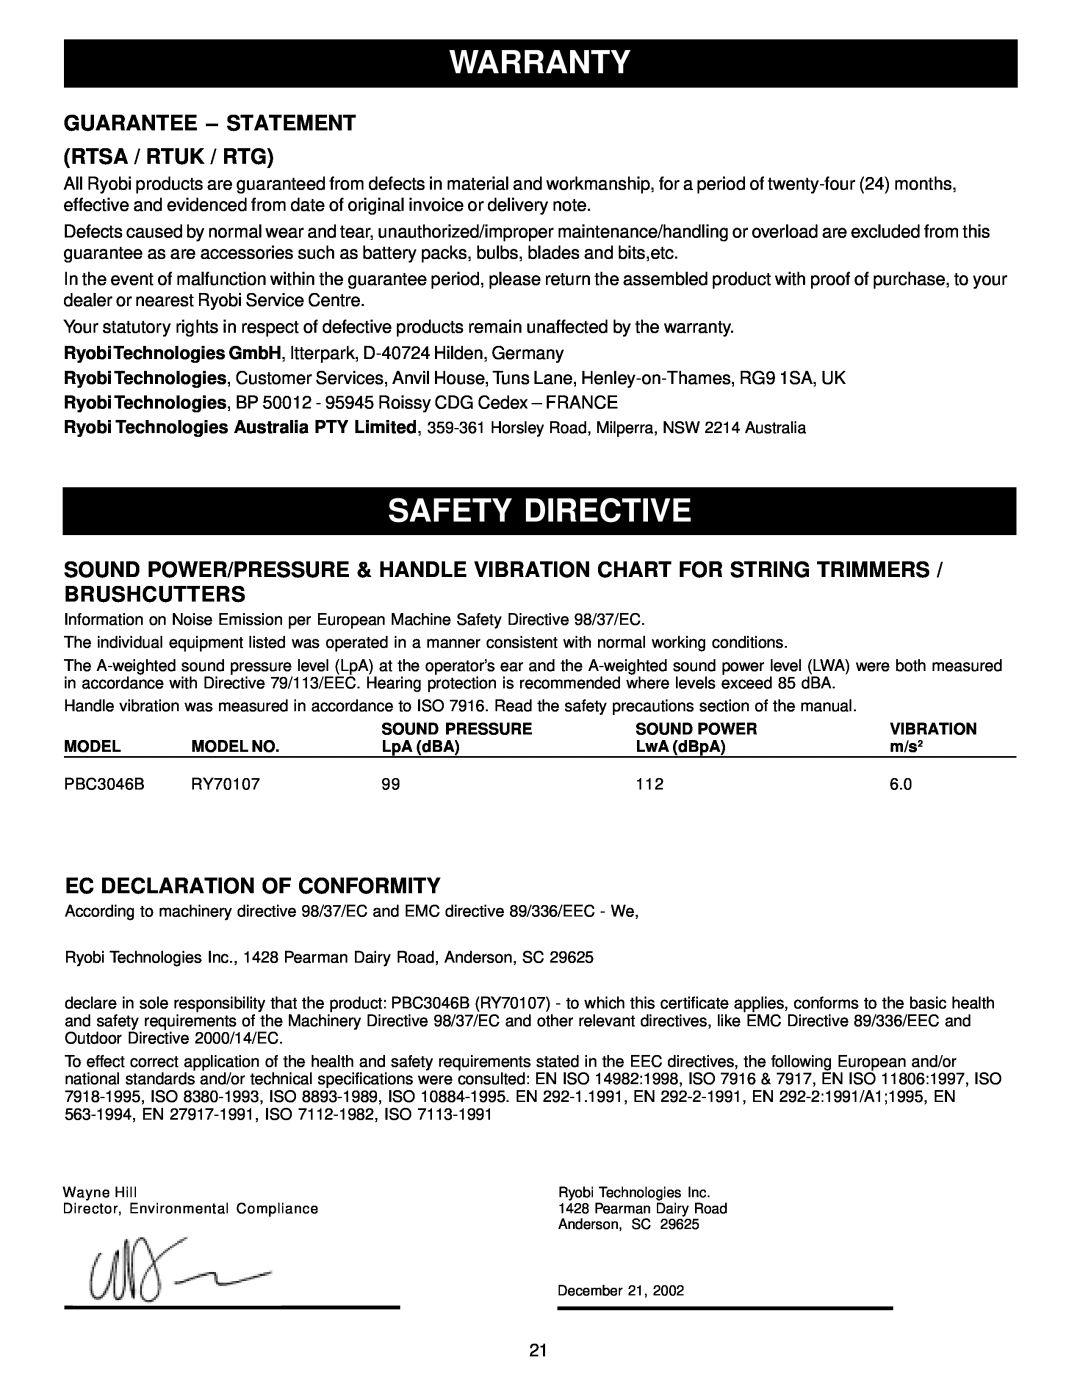 Ryobi Outdoor PBC3046B, RY70107 manual Warranty, Safety Directive, Guarantee - Statement Rtsa / Rtuk / Rtg 